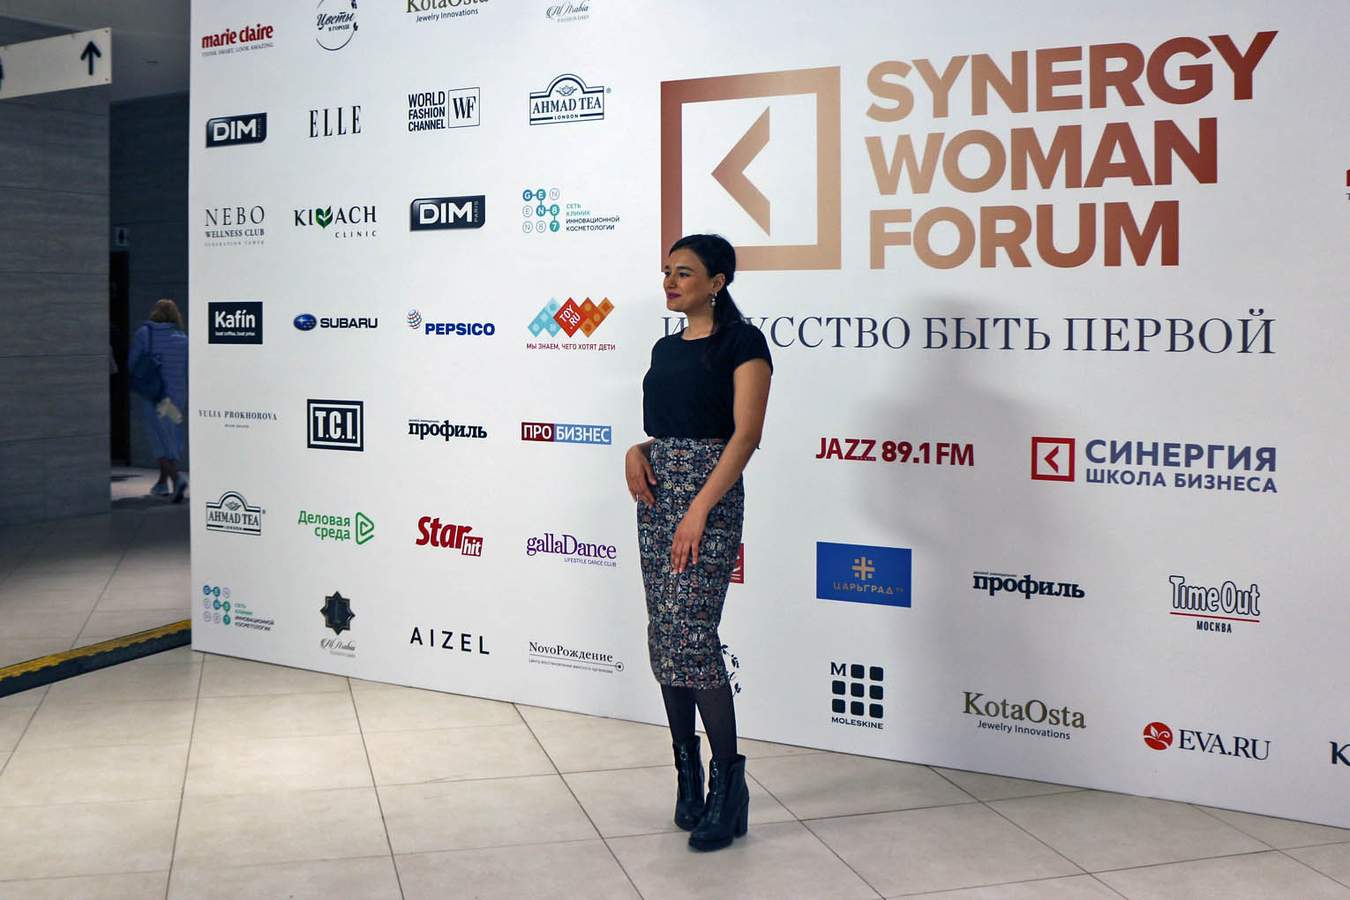 Synergy Woman Forum 2019